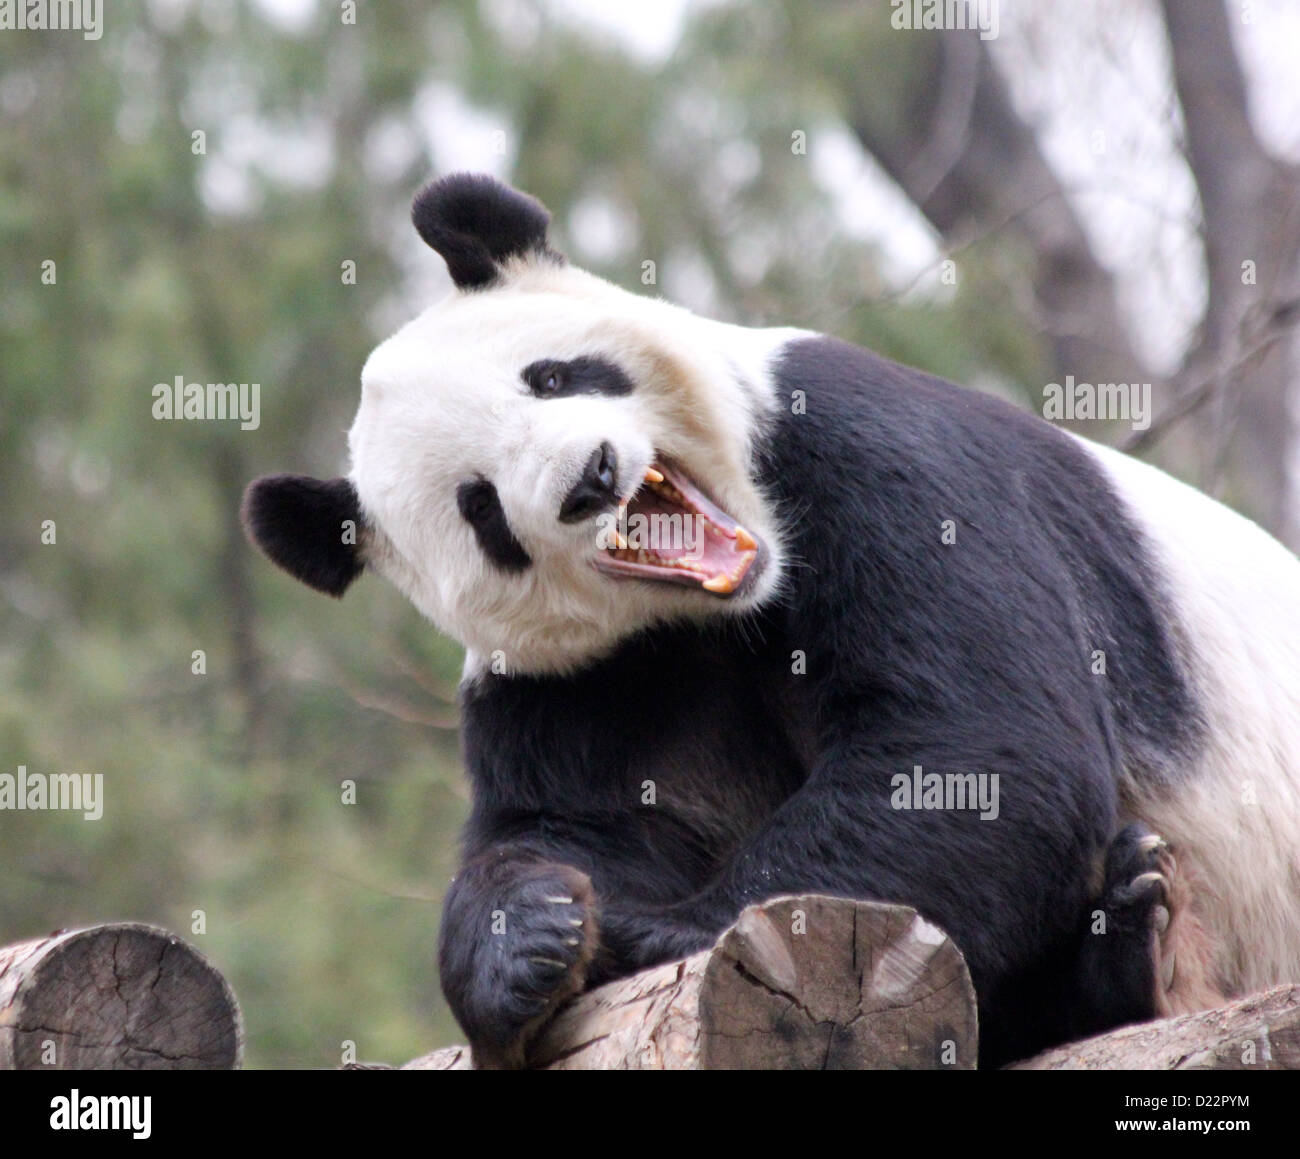 Portrait Panda Bear Wild Animal Realistic Stock Illustration 603128978